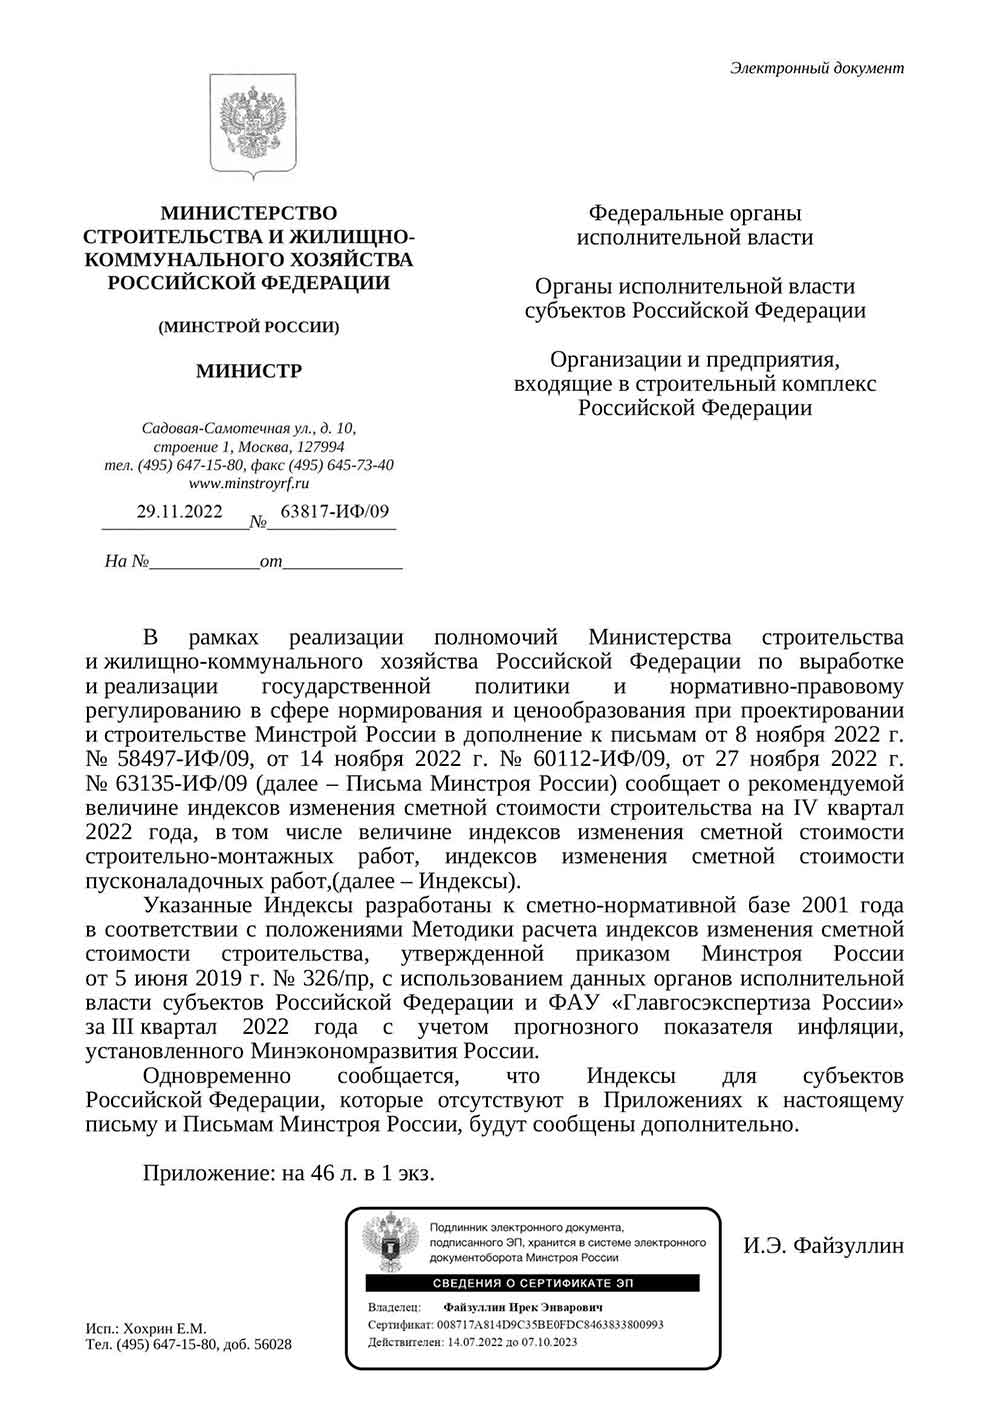 Письмо Минстроя РФ №63817-ИФ/09 от 29.11.2022 г.